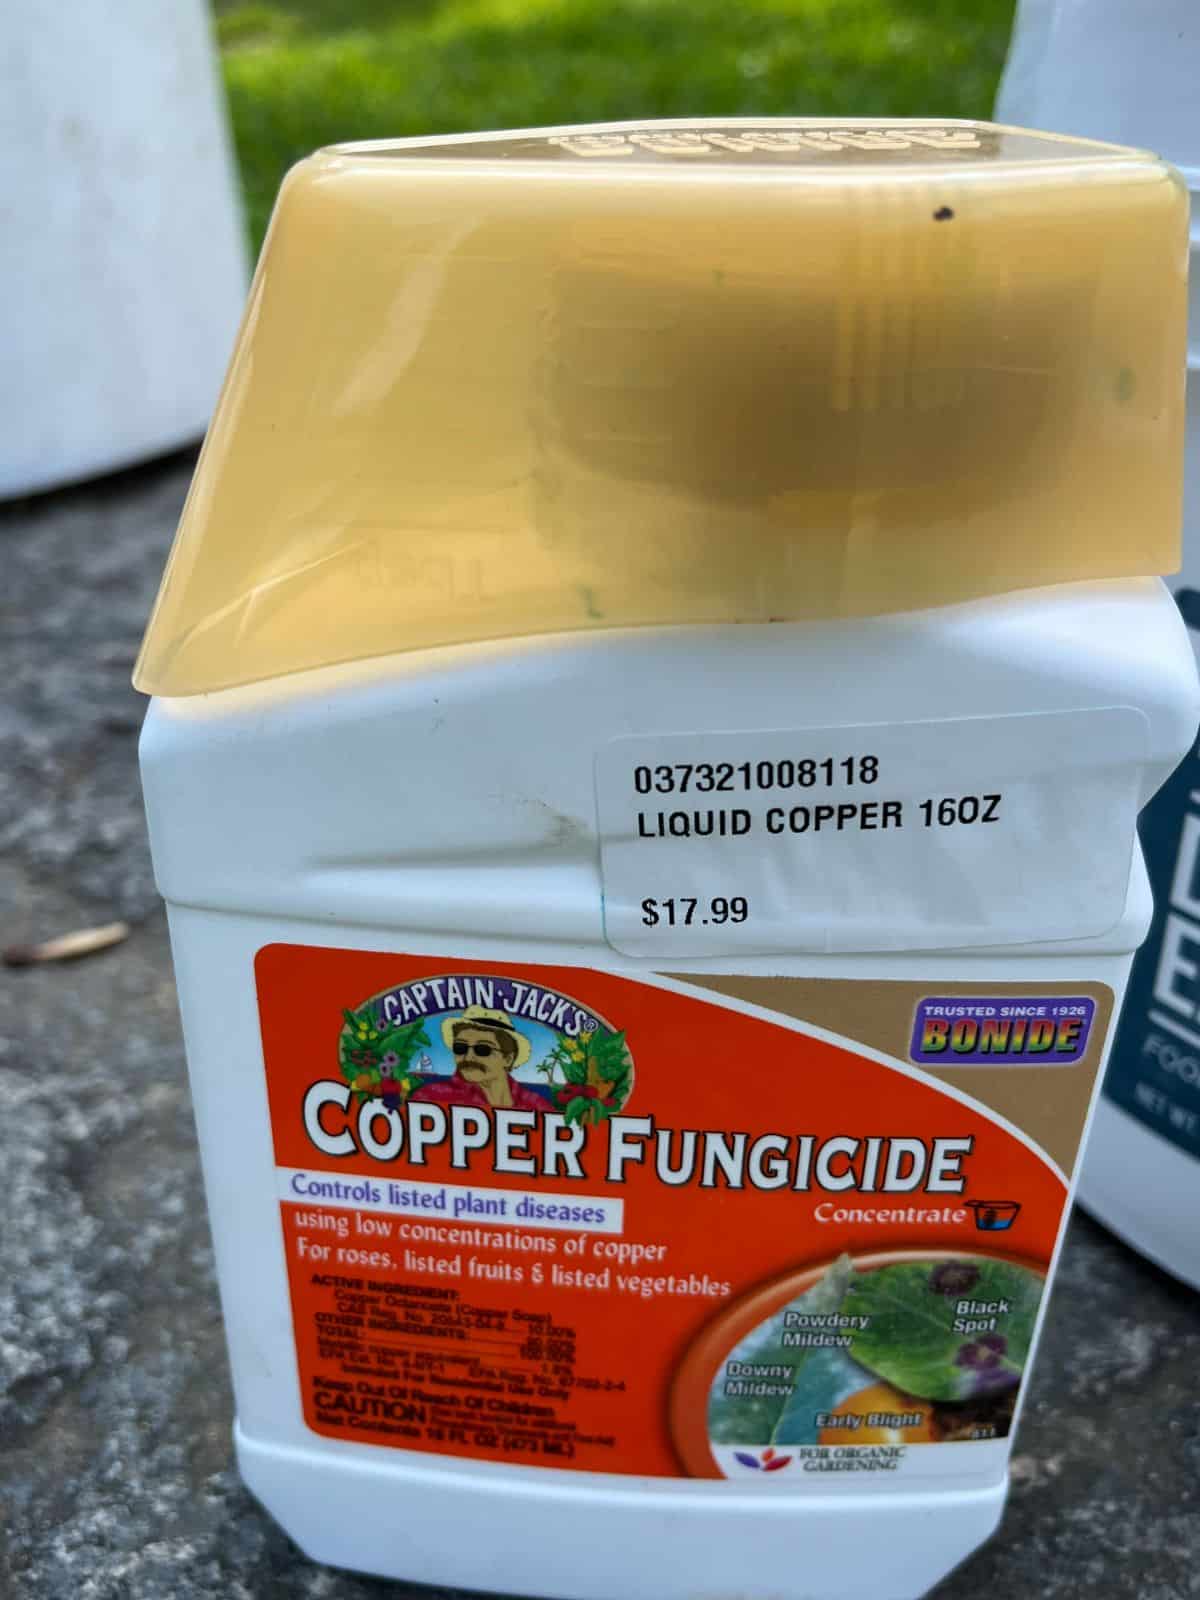 Copper fungicide, an organic fungal disease treatment